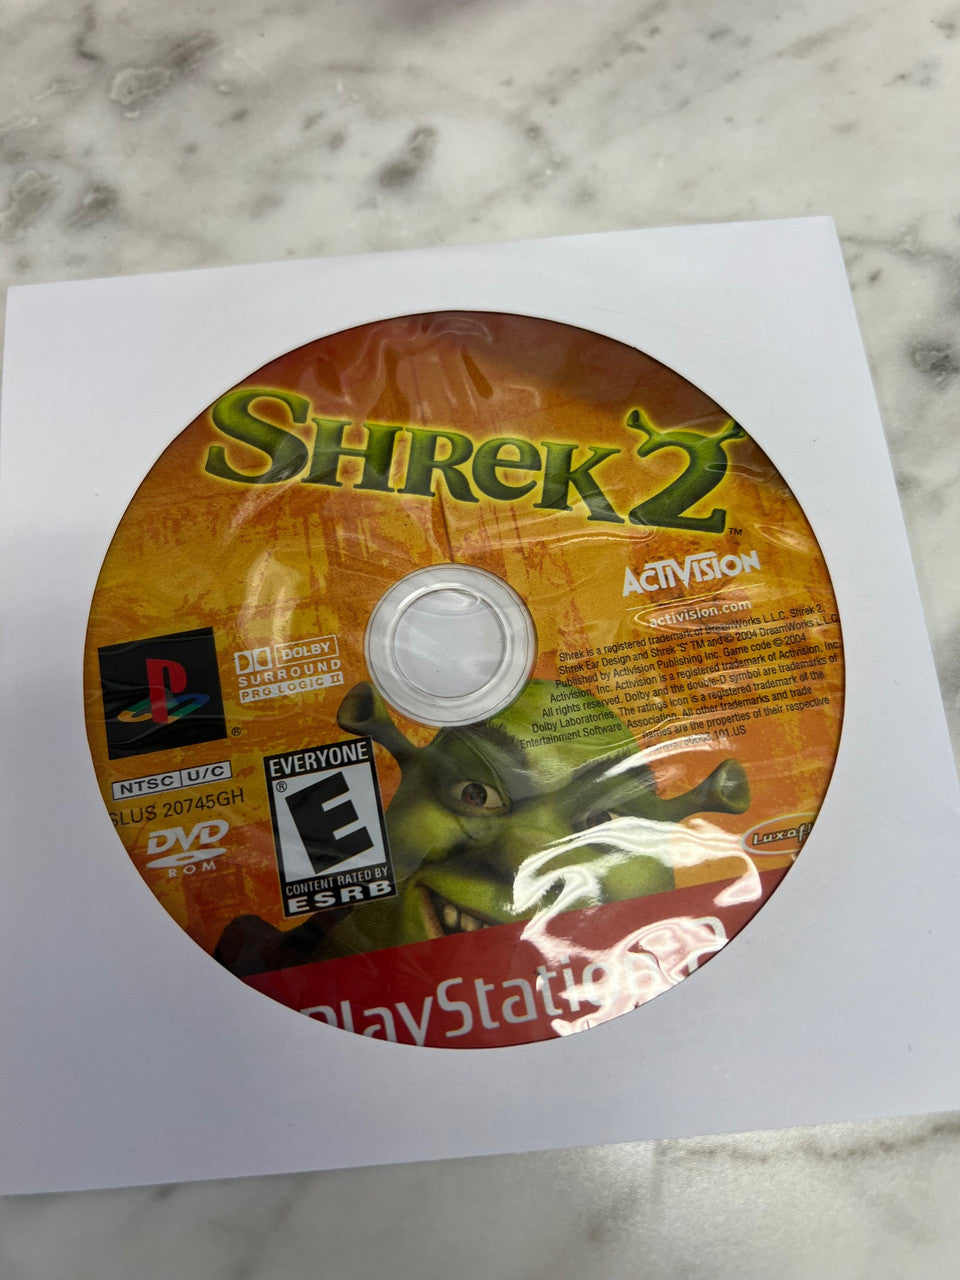 Shrek 2 Playstation 2 PS2 Disc only